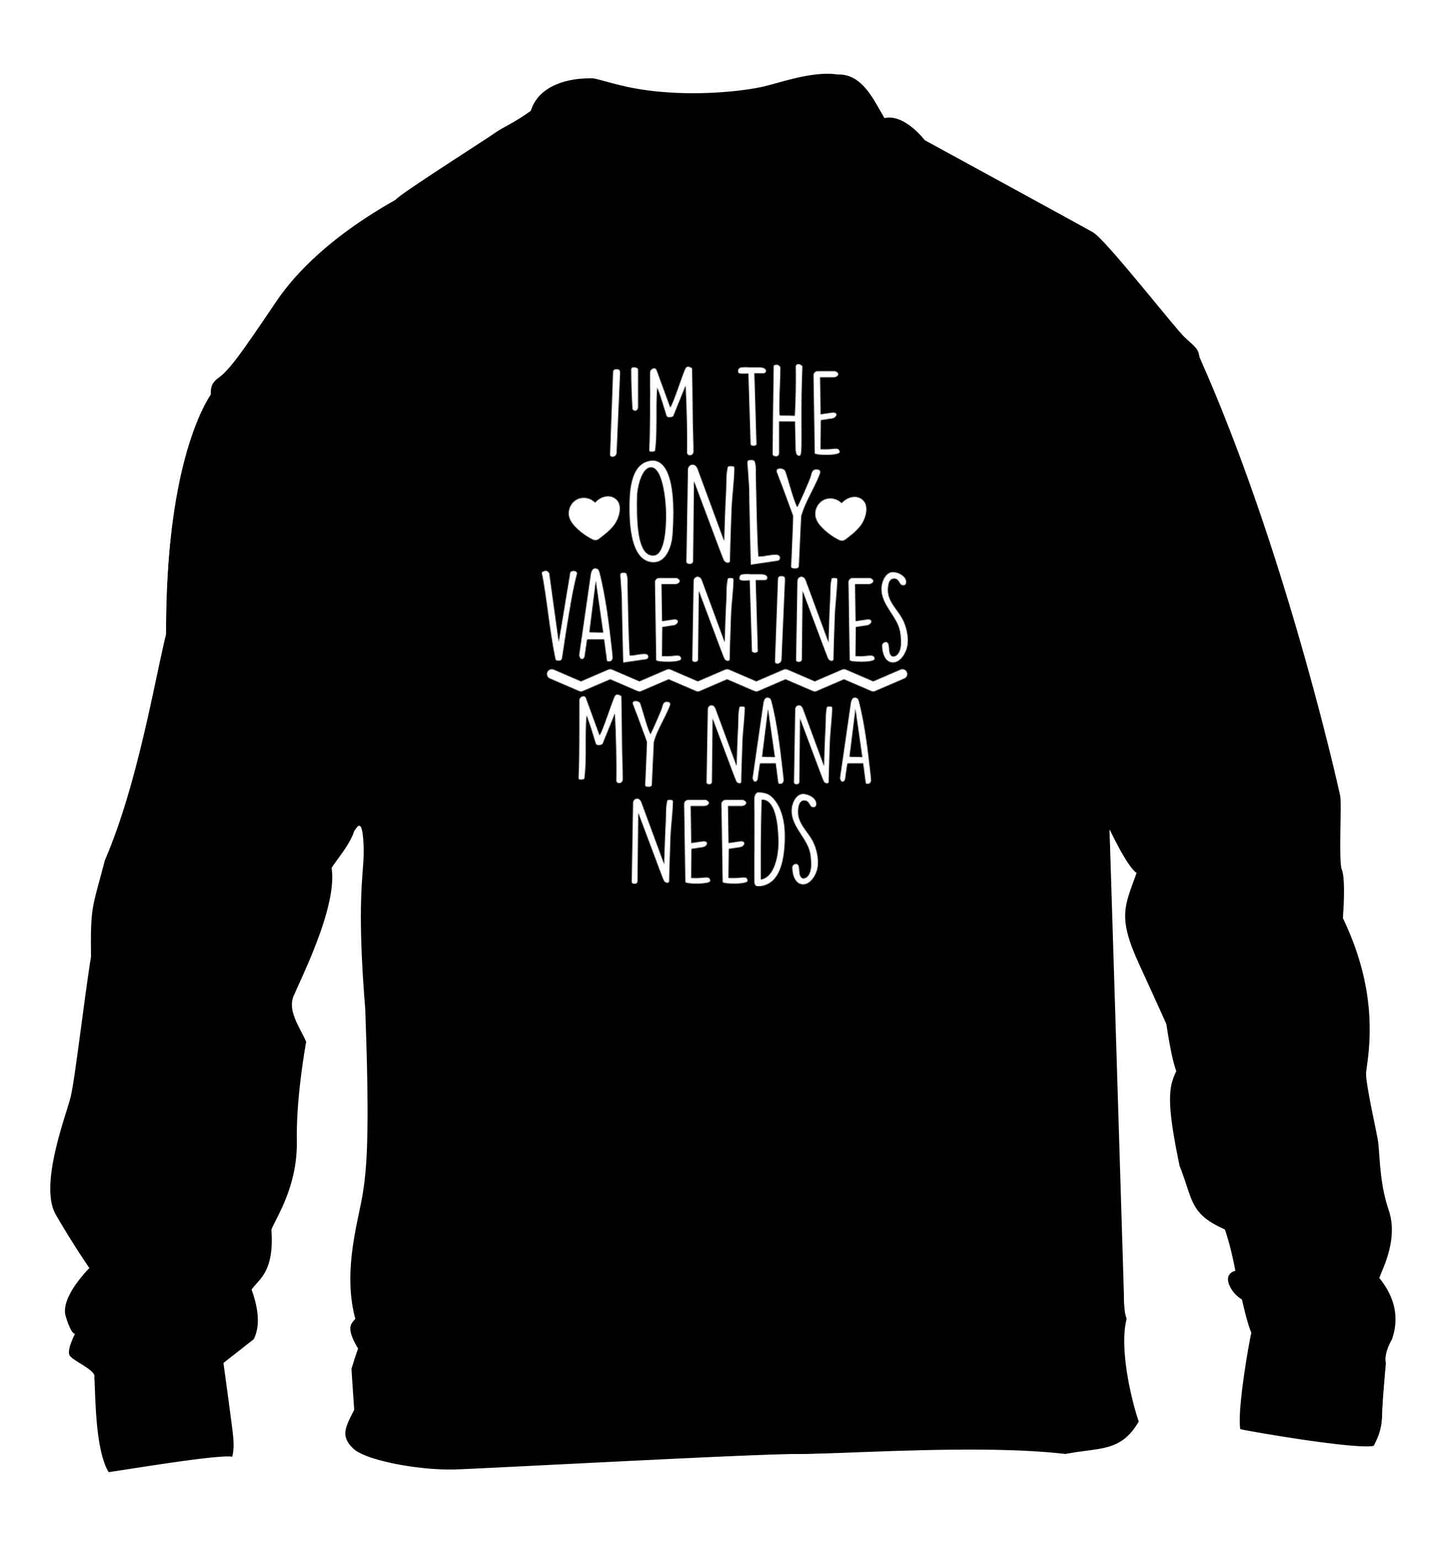 I'm the only valentines my nana needs children's black sweater 12-13 Years